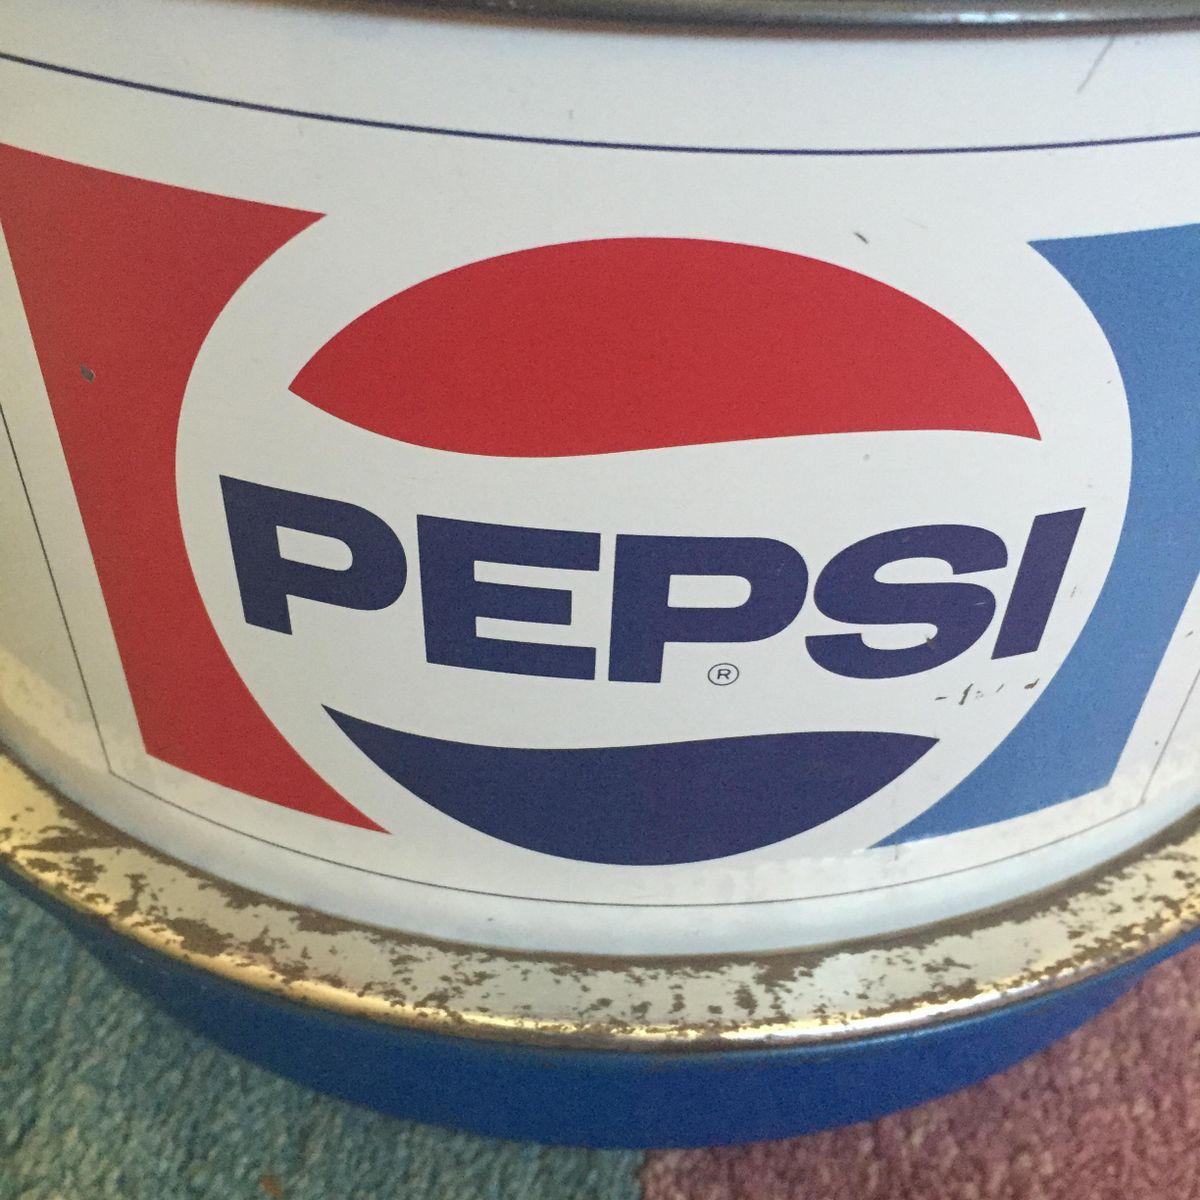 1960s Pepsi Logo - Pepsi Cola Picnic Box, 1960s for sale at Pamono